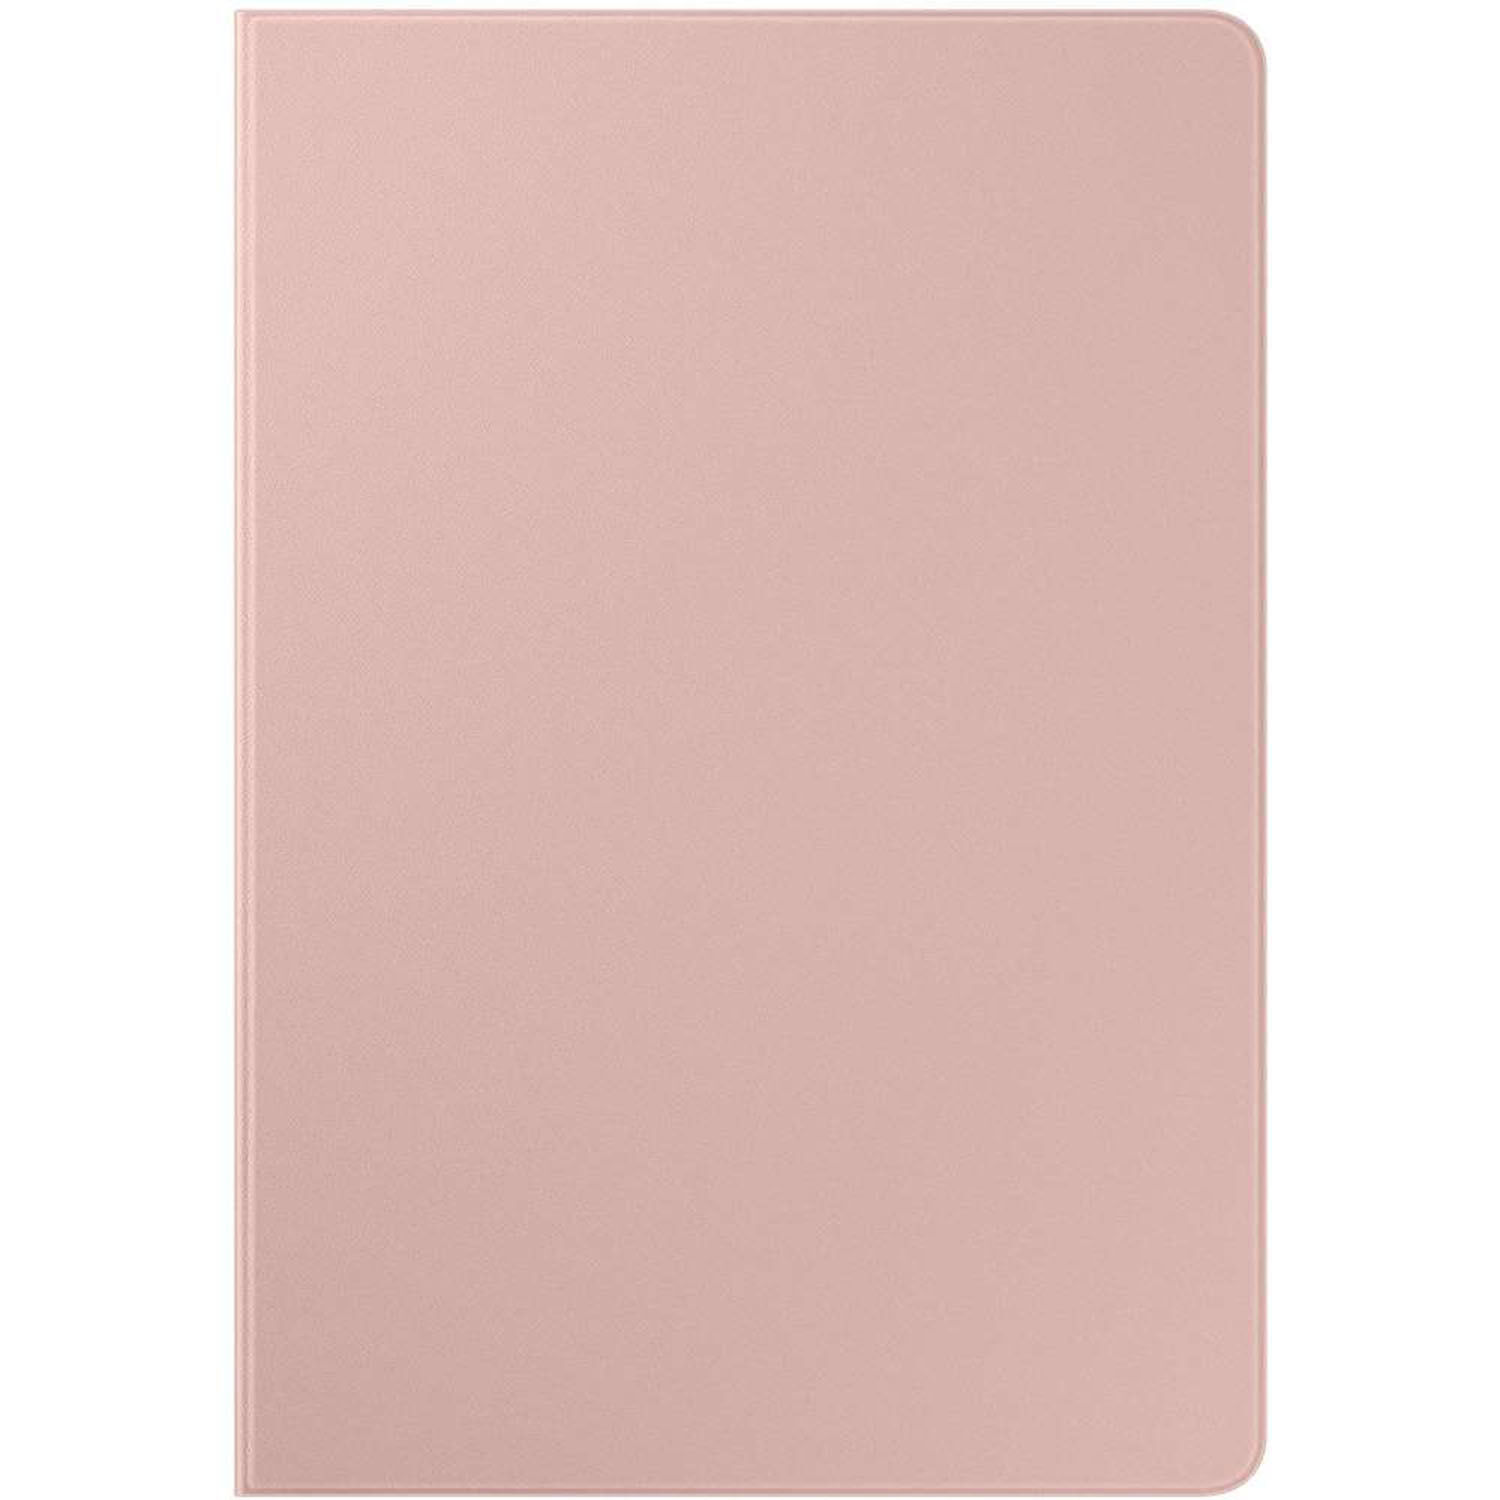 Samsung Coque Book pour le Samsung Galaxy Tab S7 - Rose